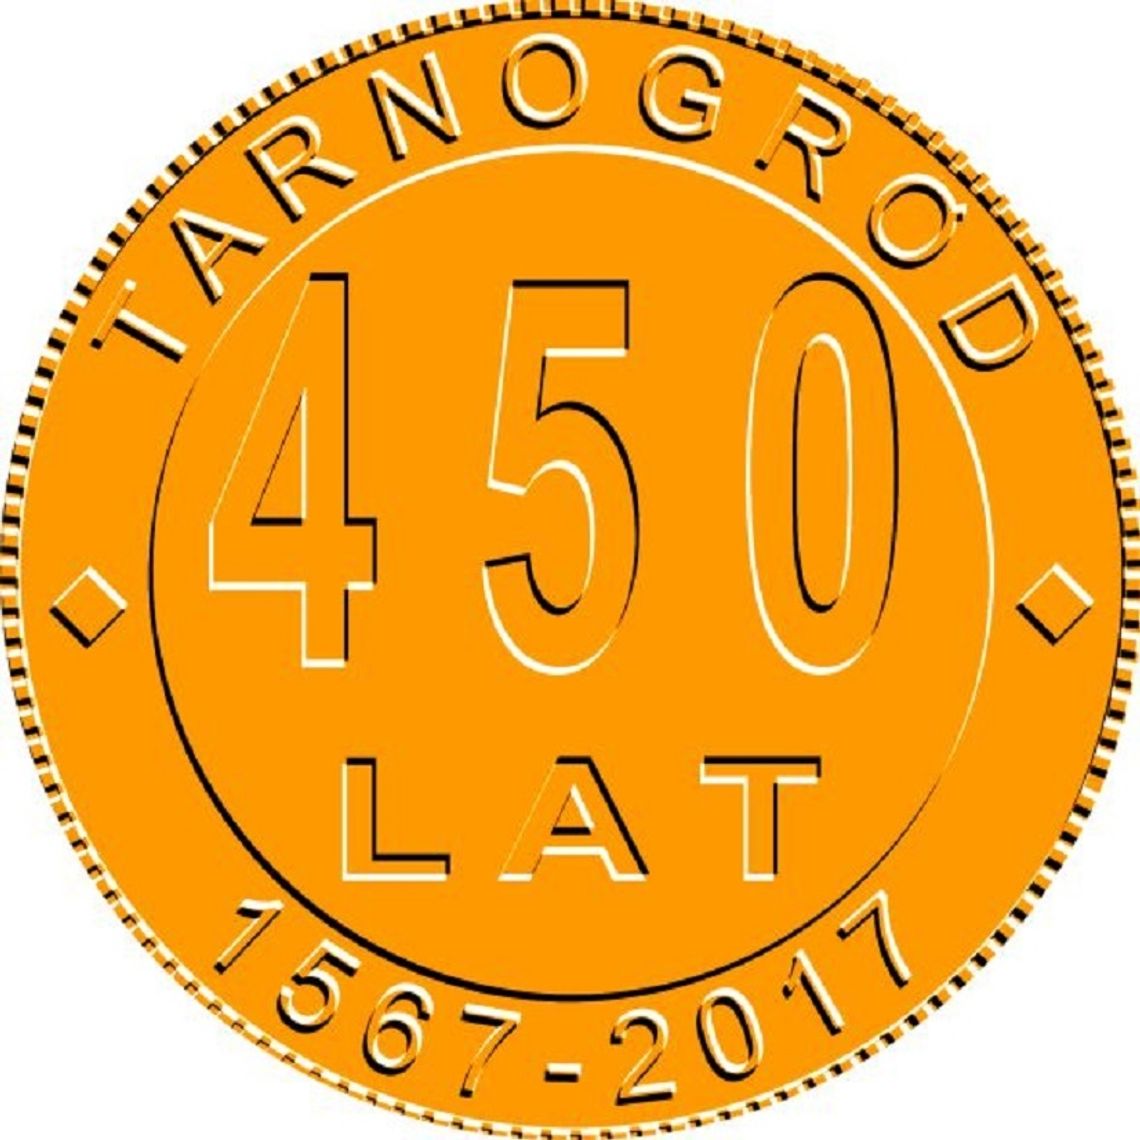 Tarnogród: Specjalna moneta na 450-lecie miasta